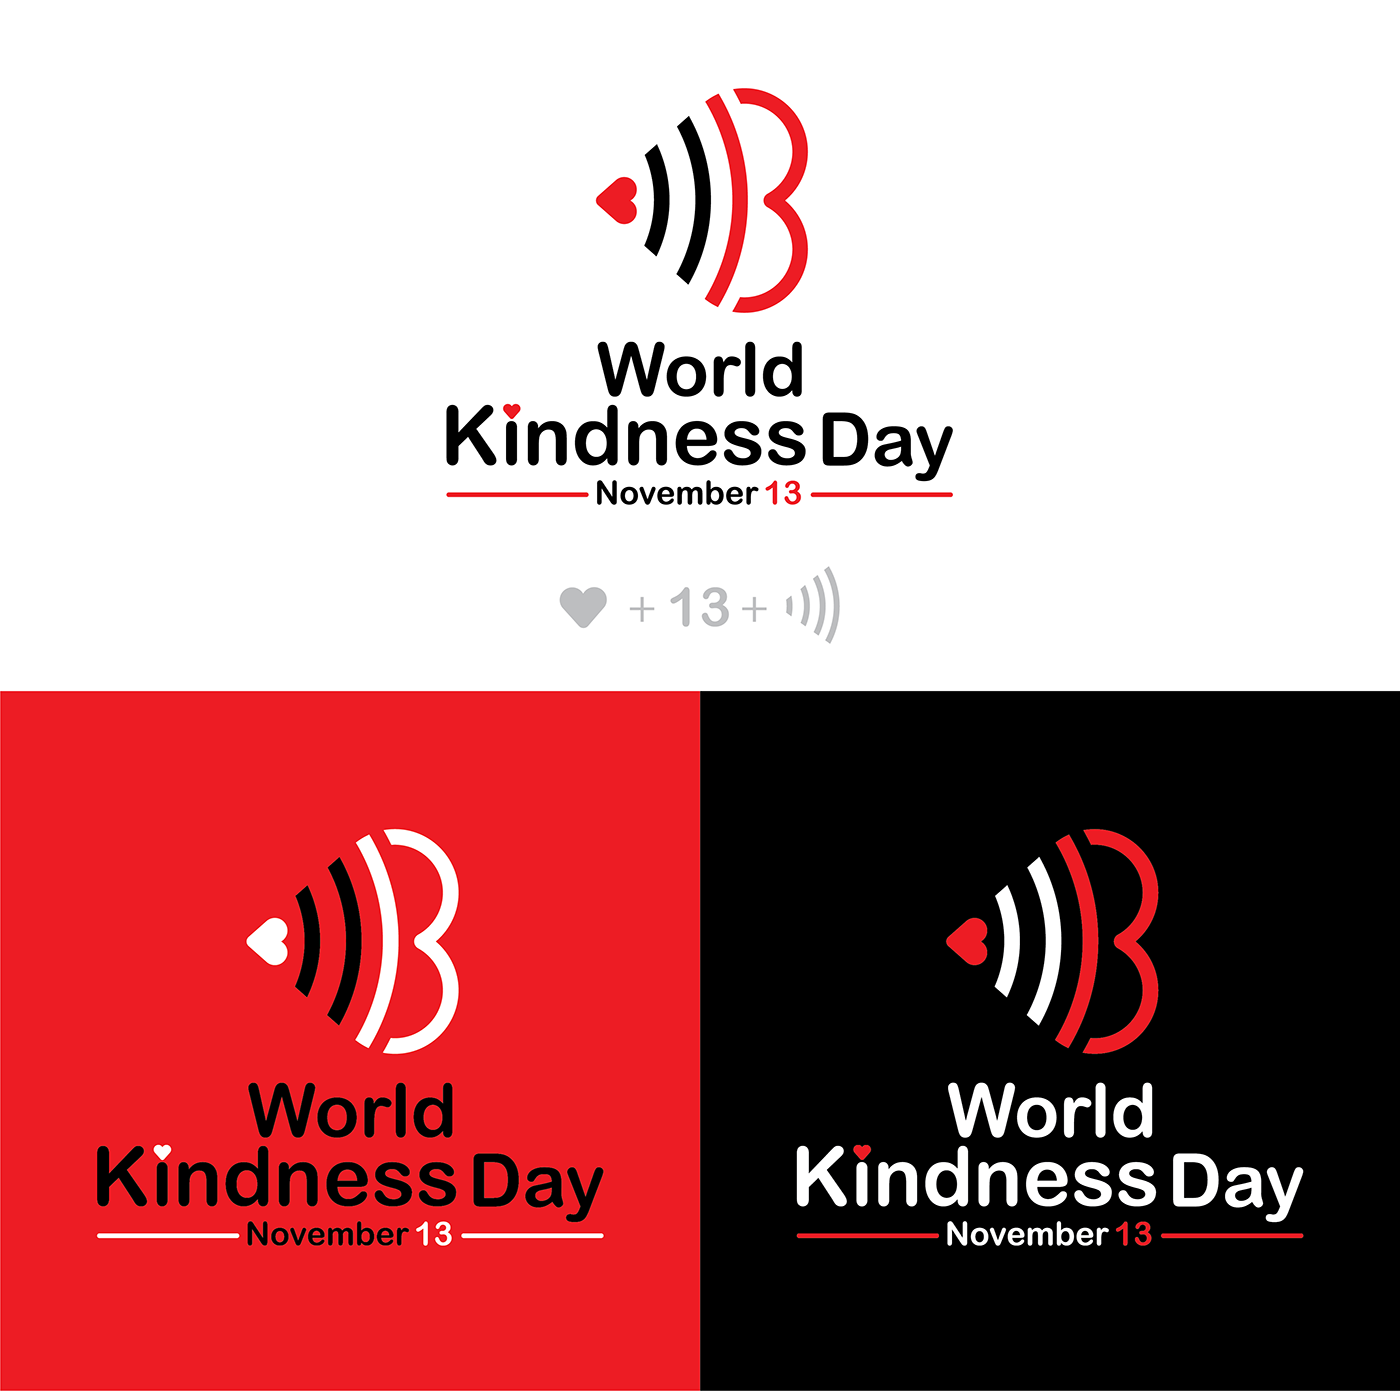 World kindness Day